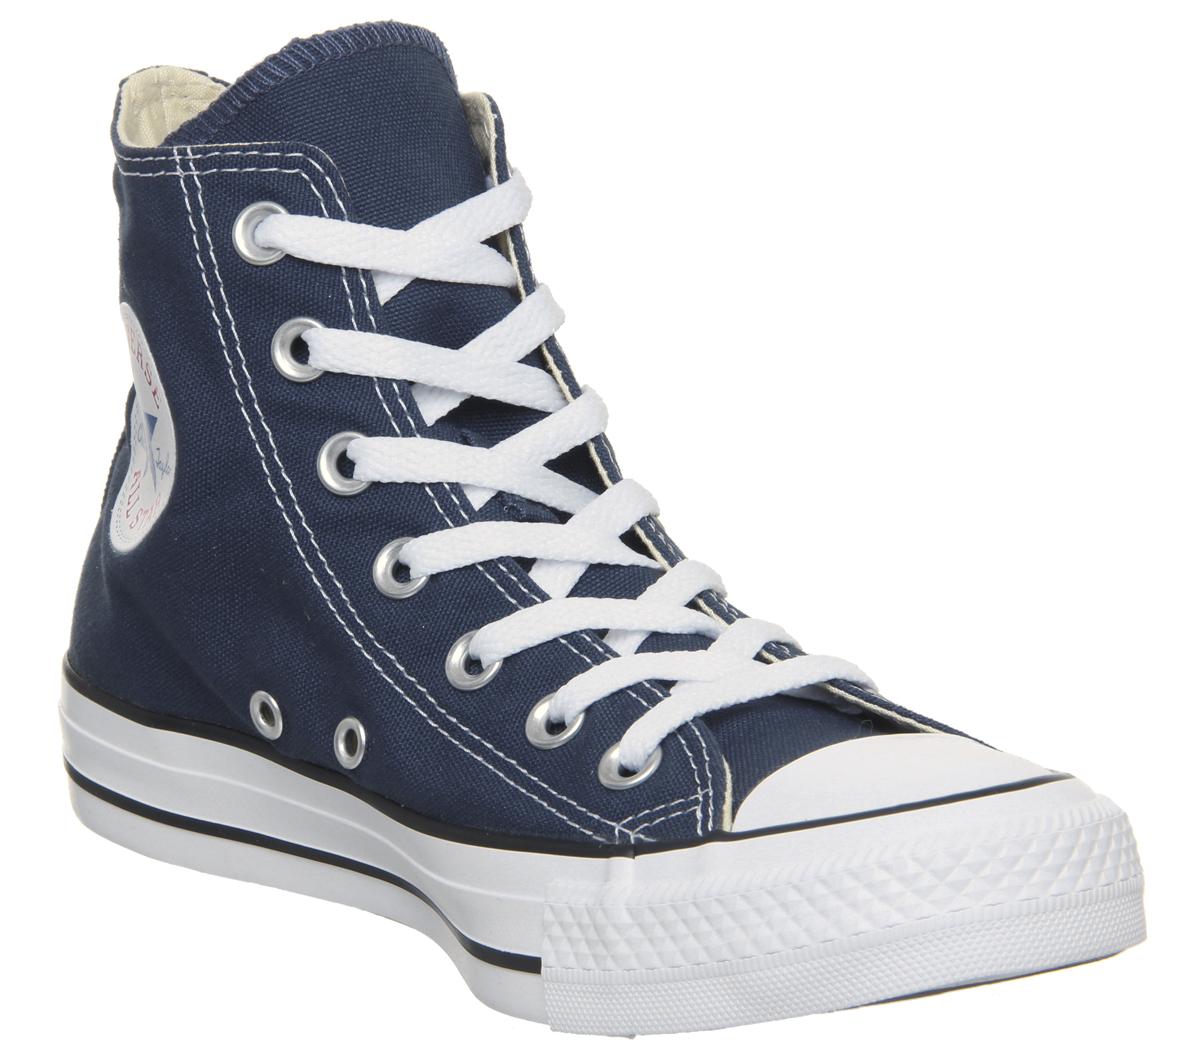 blue converse boots